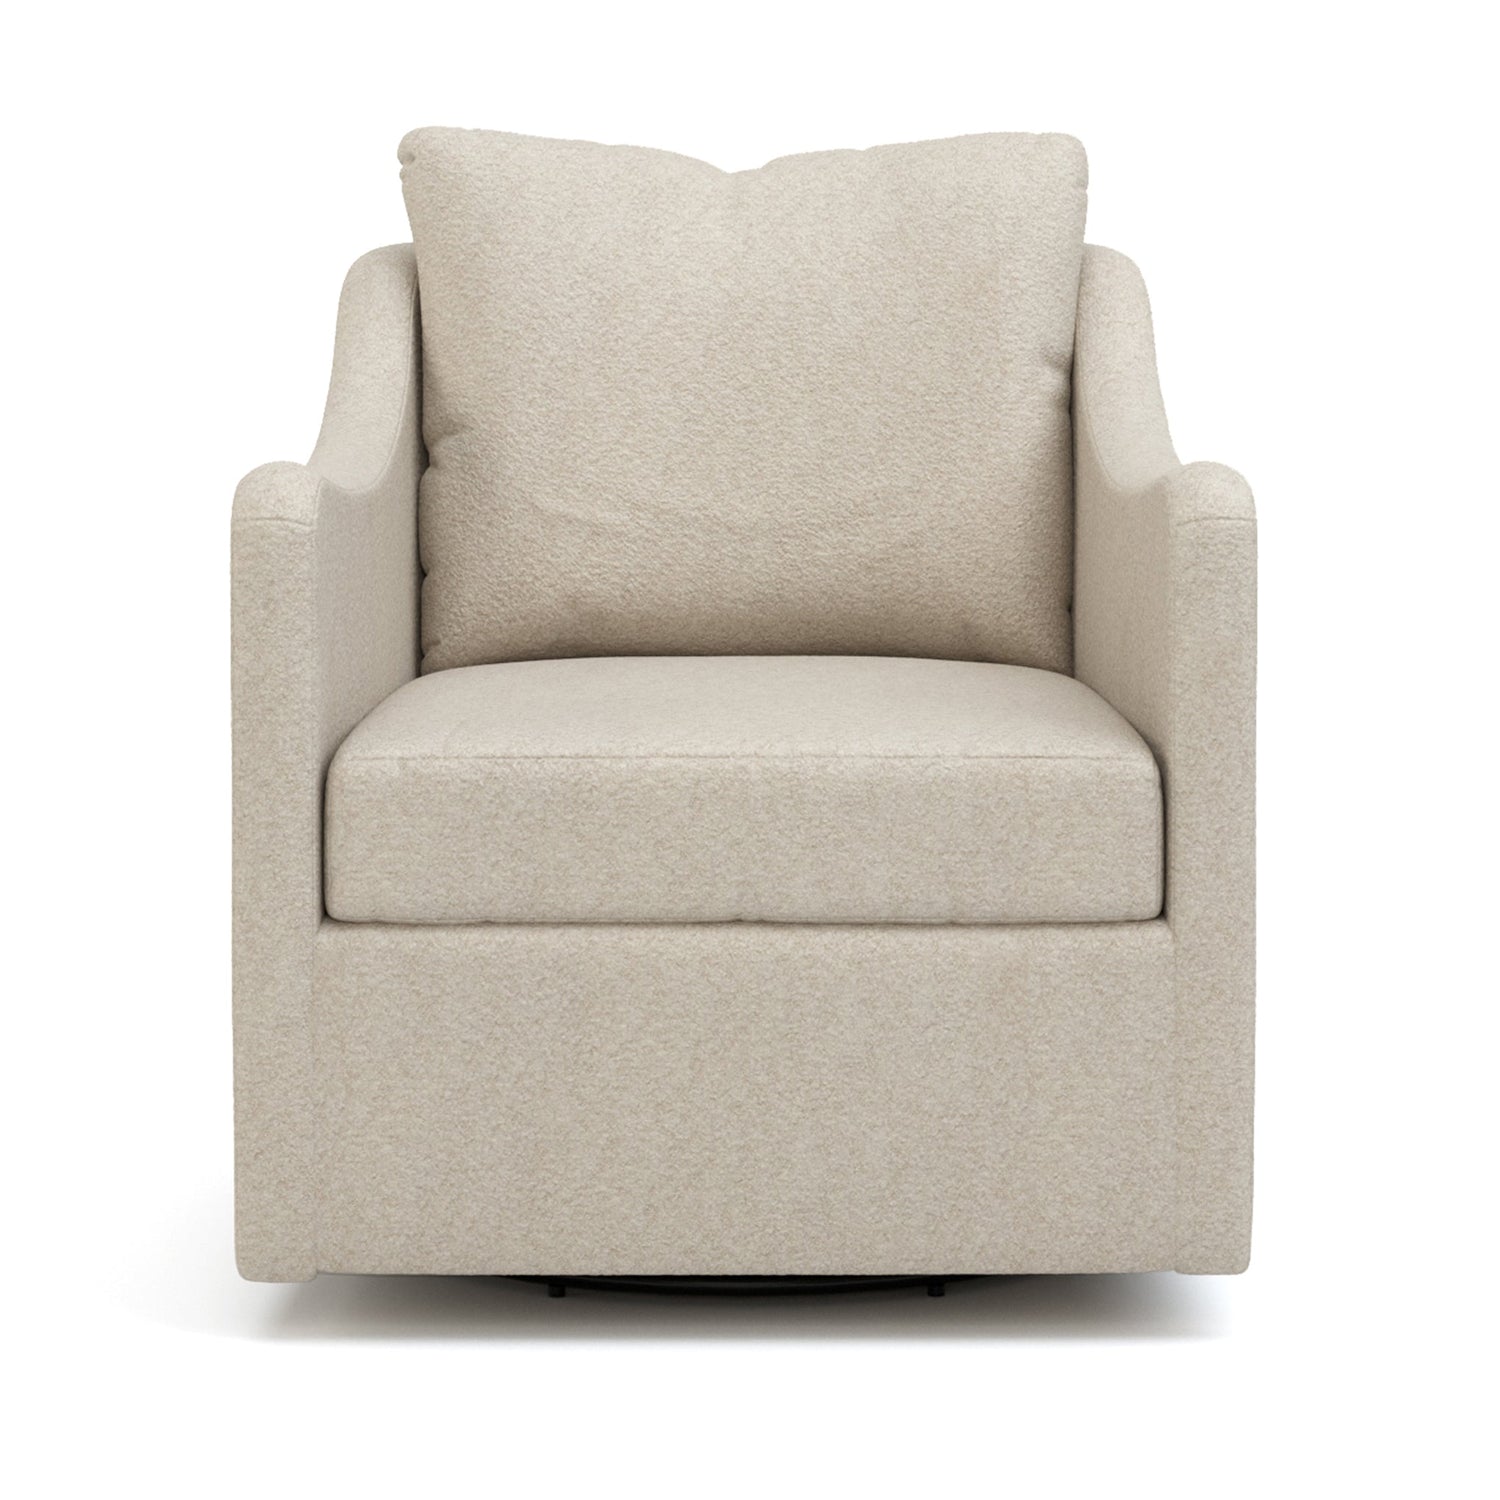 Maidstone Swivel Chair in 4898-71 fabric